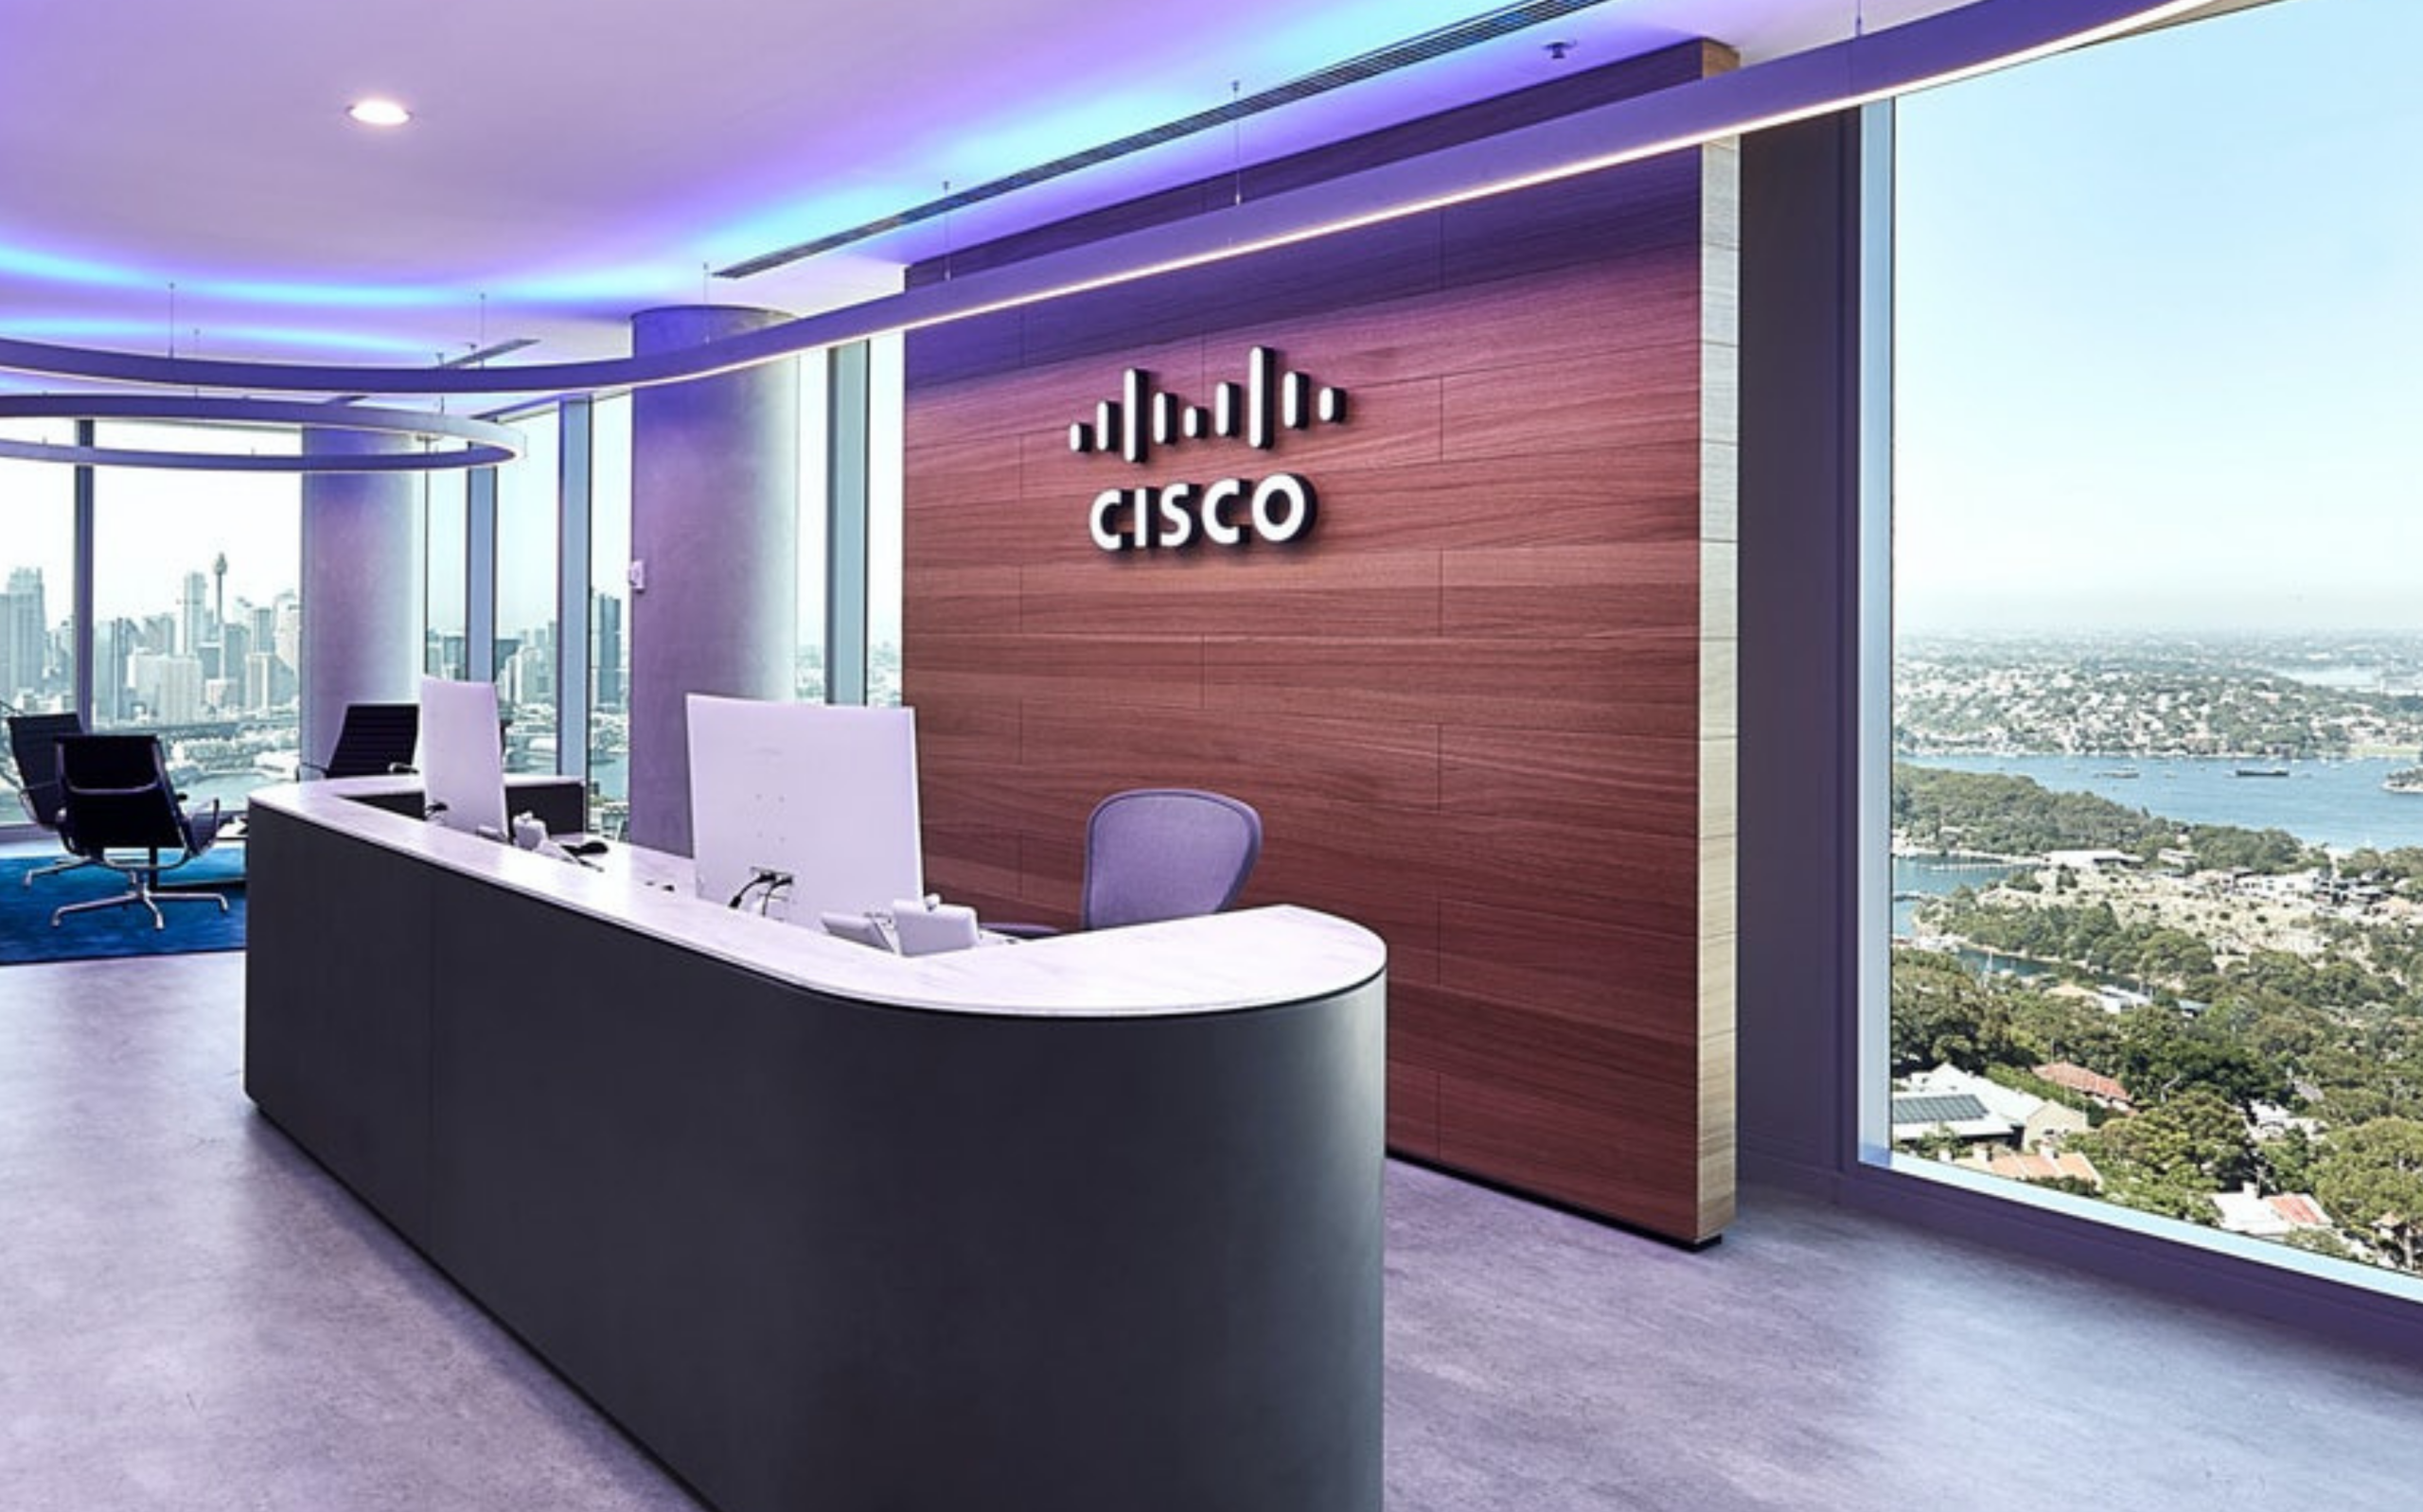 Cisco + Customer Service + Process Mining Hero Image